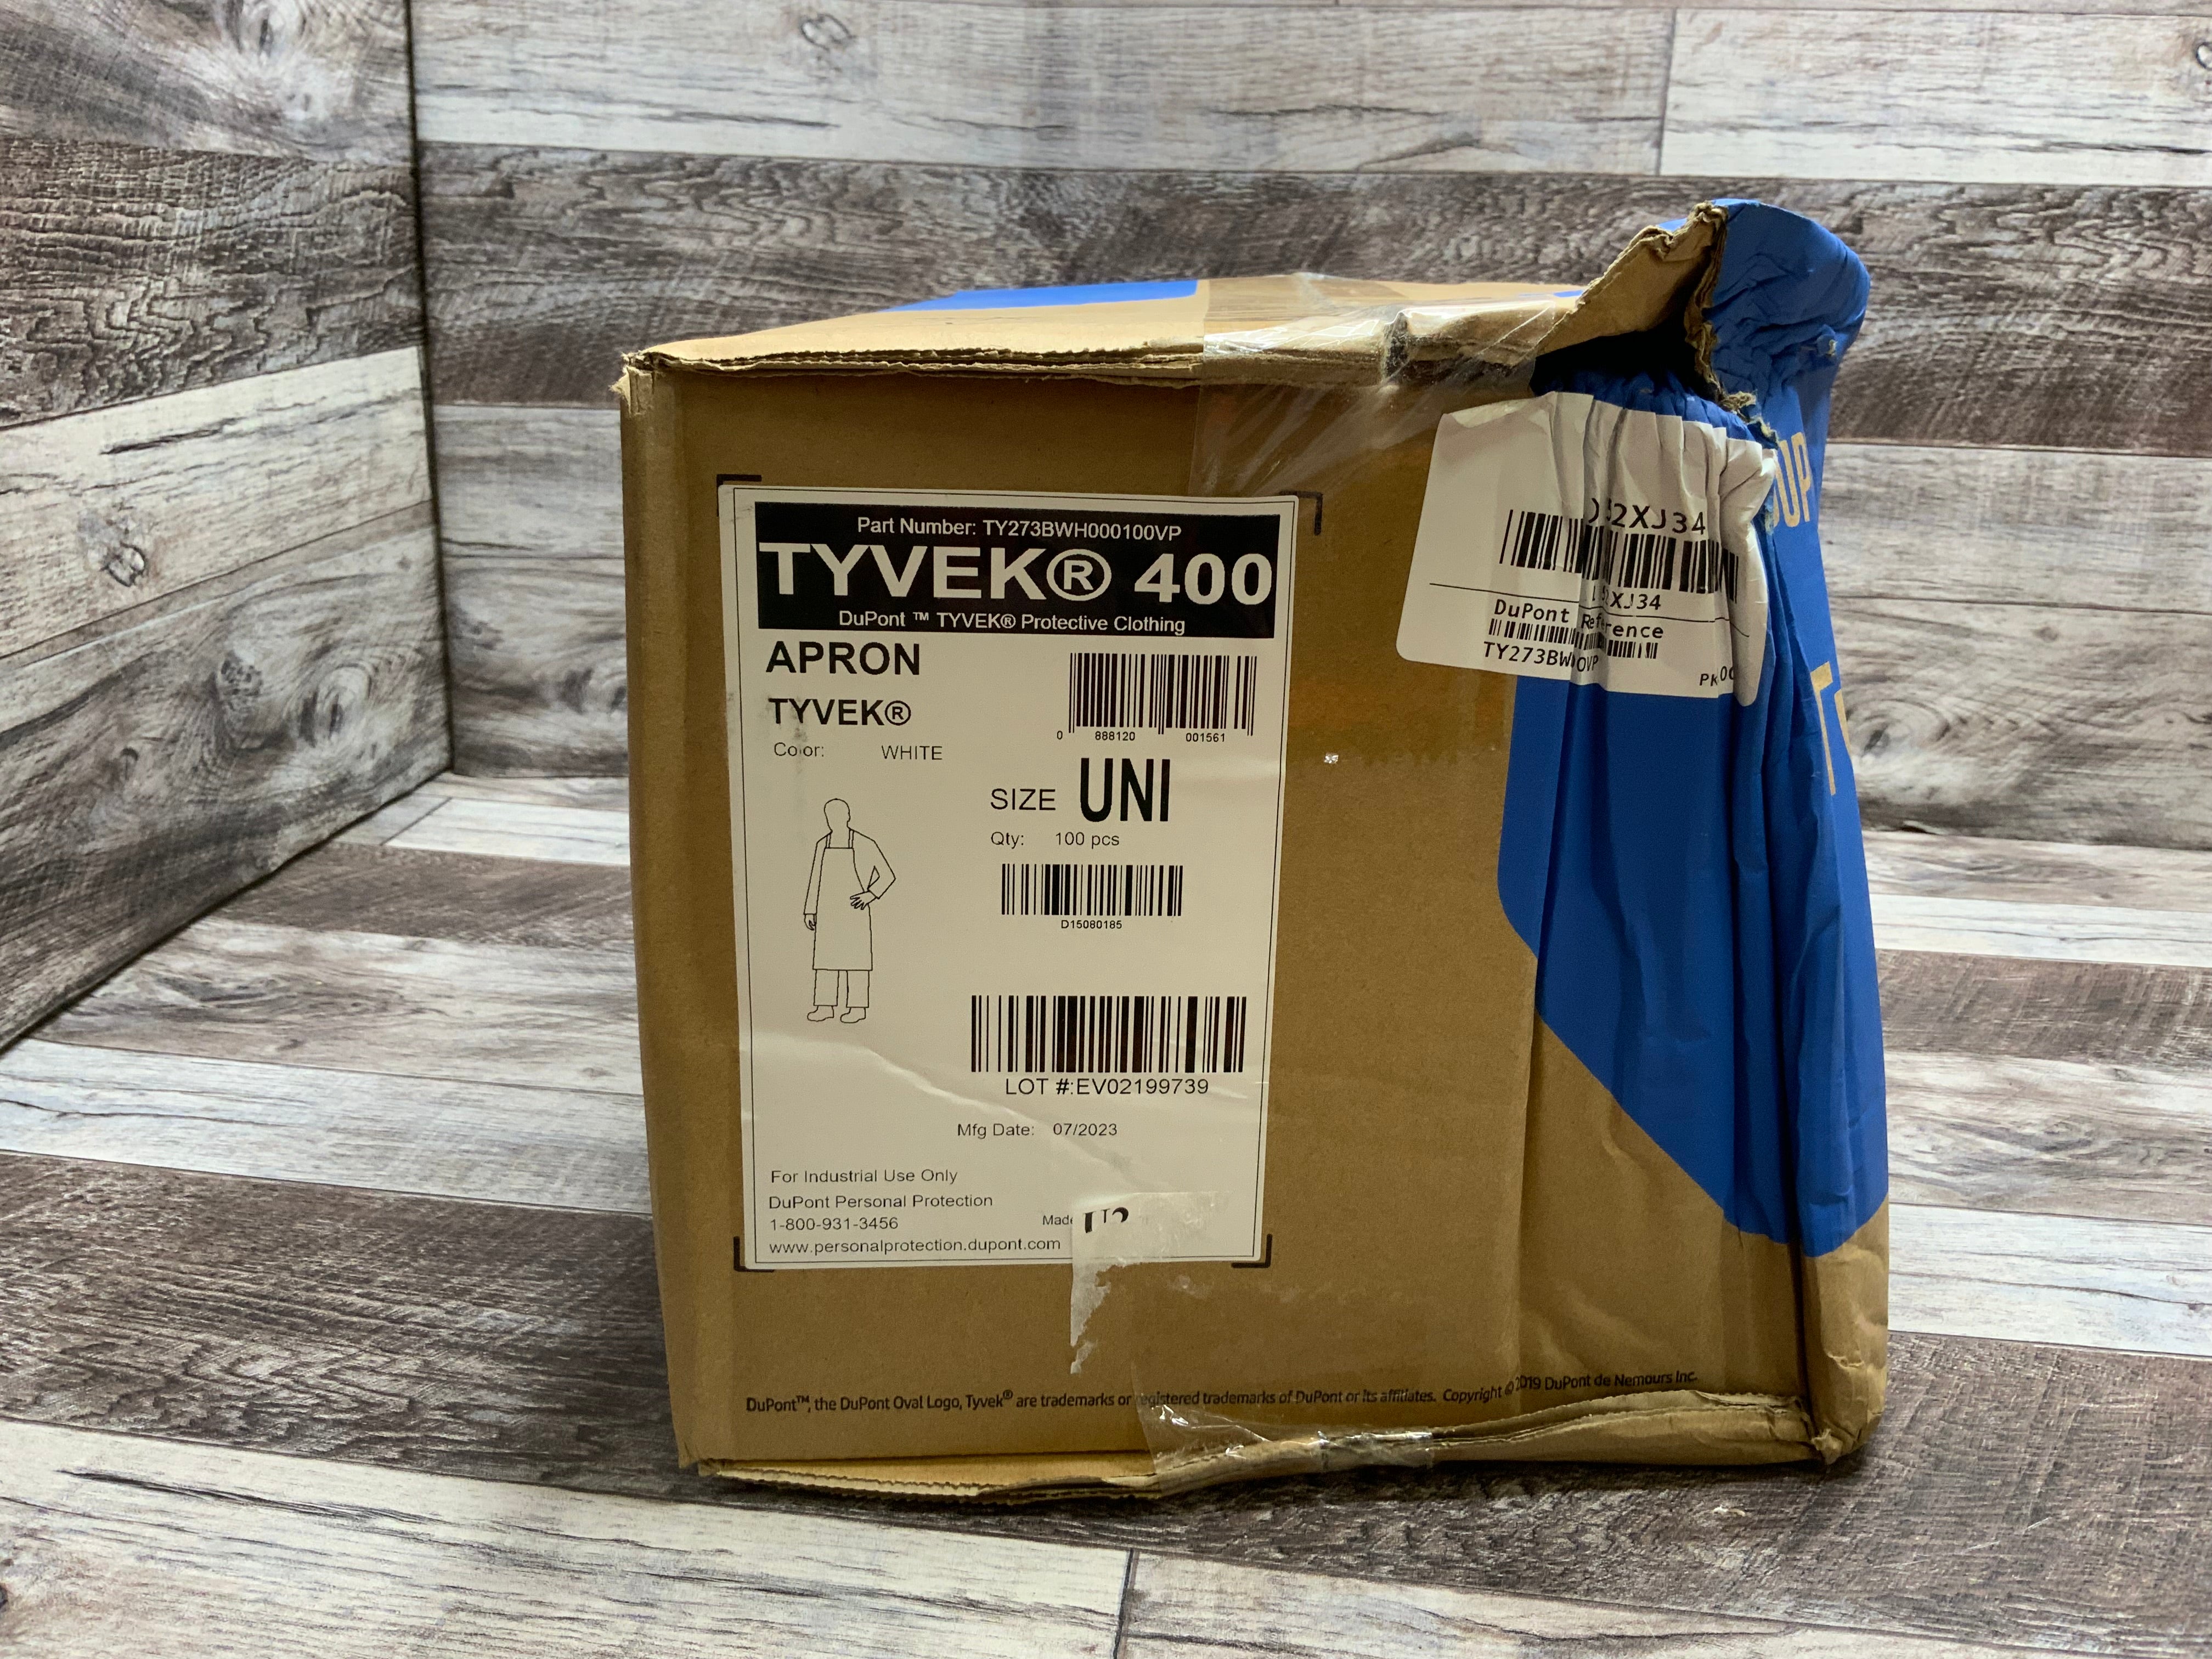 Dupont Tyvek 400 Disposable Bib Apron - White - (100 Pack) (TY273BWH000100VP) (8174762688750)